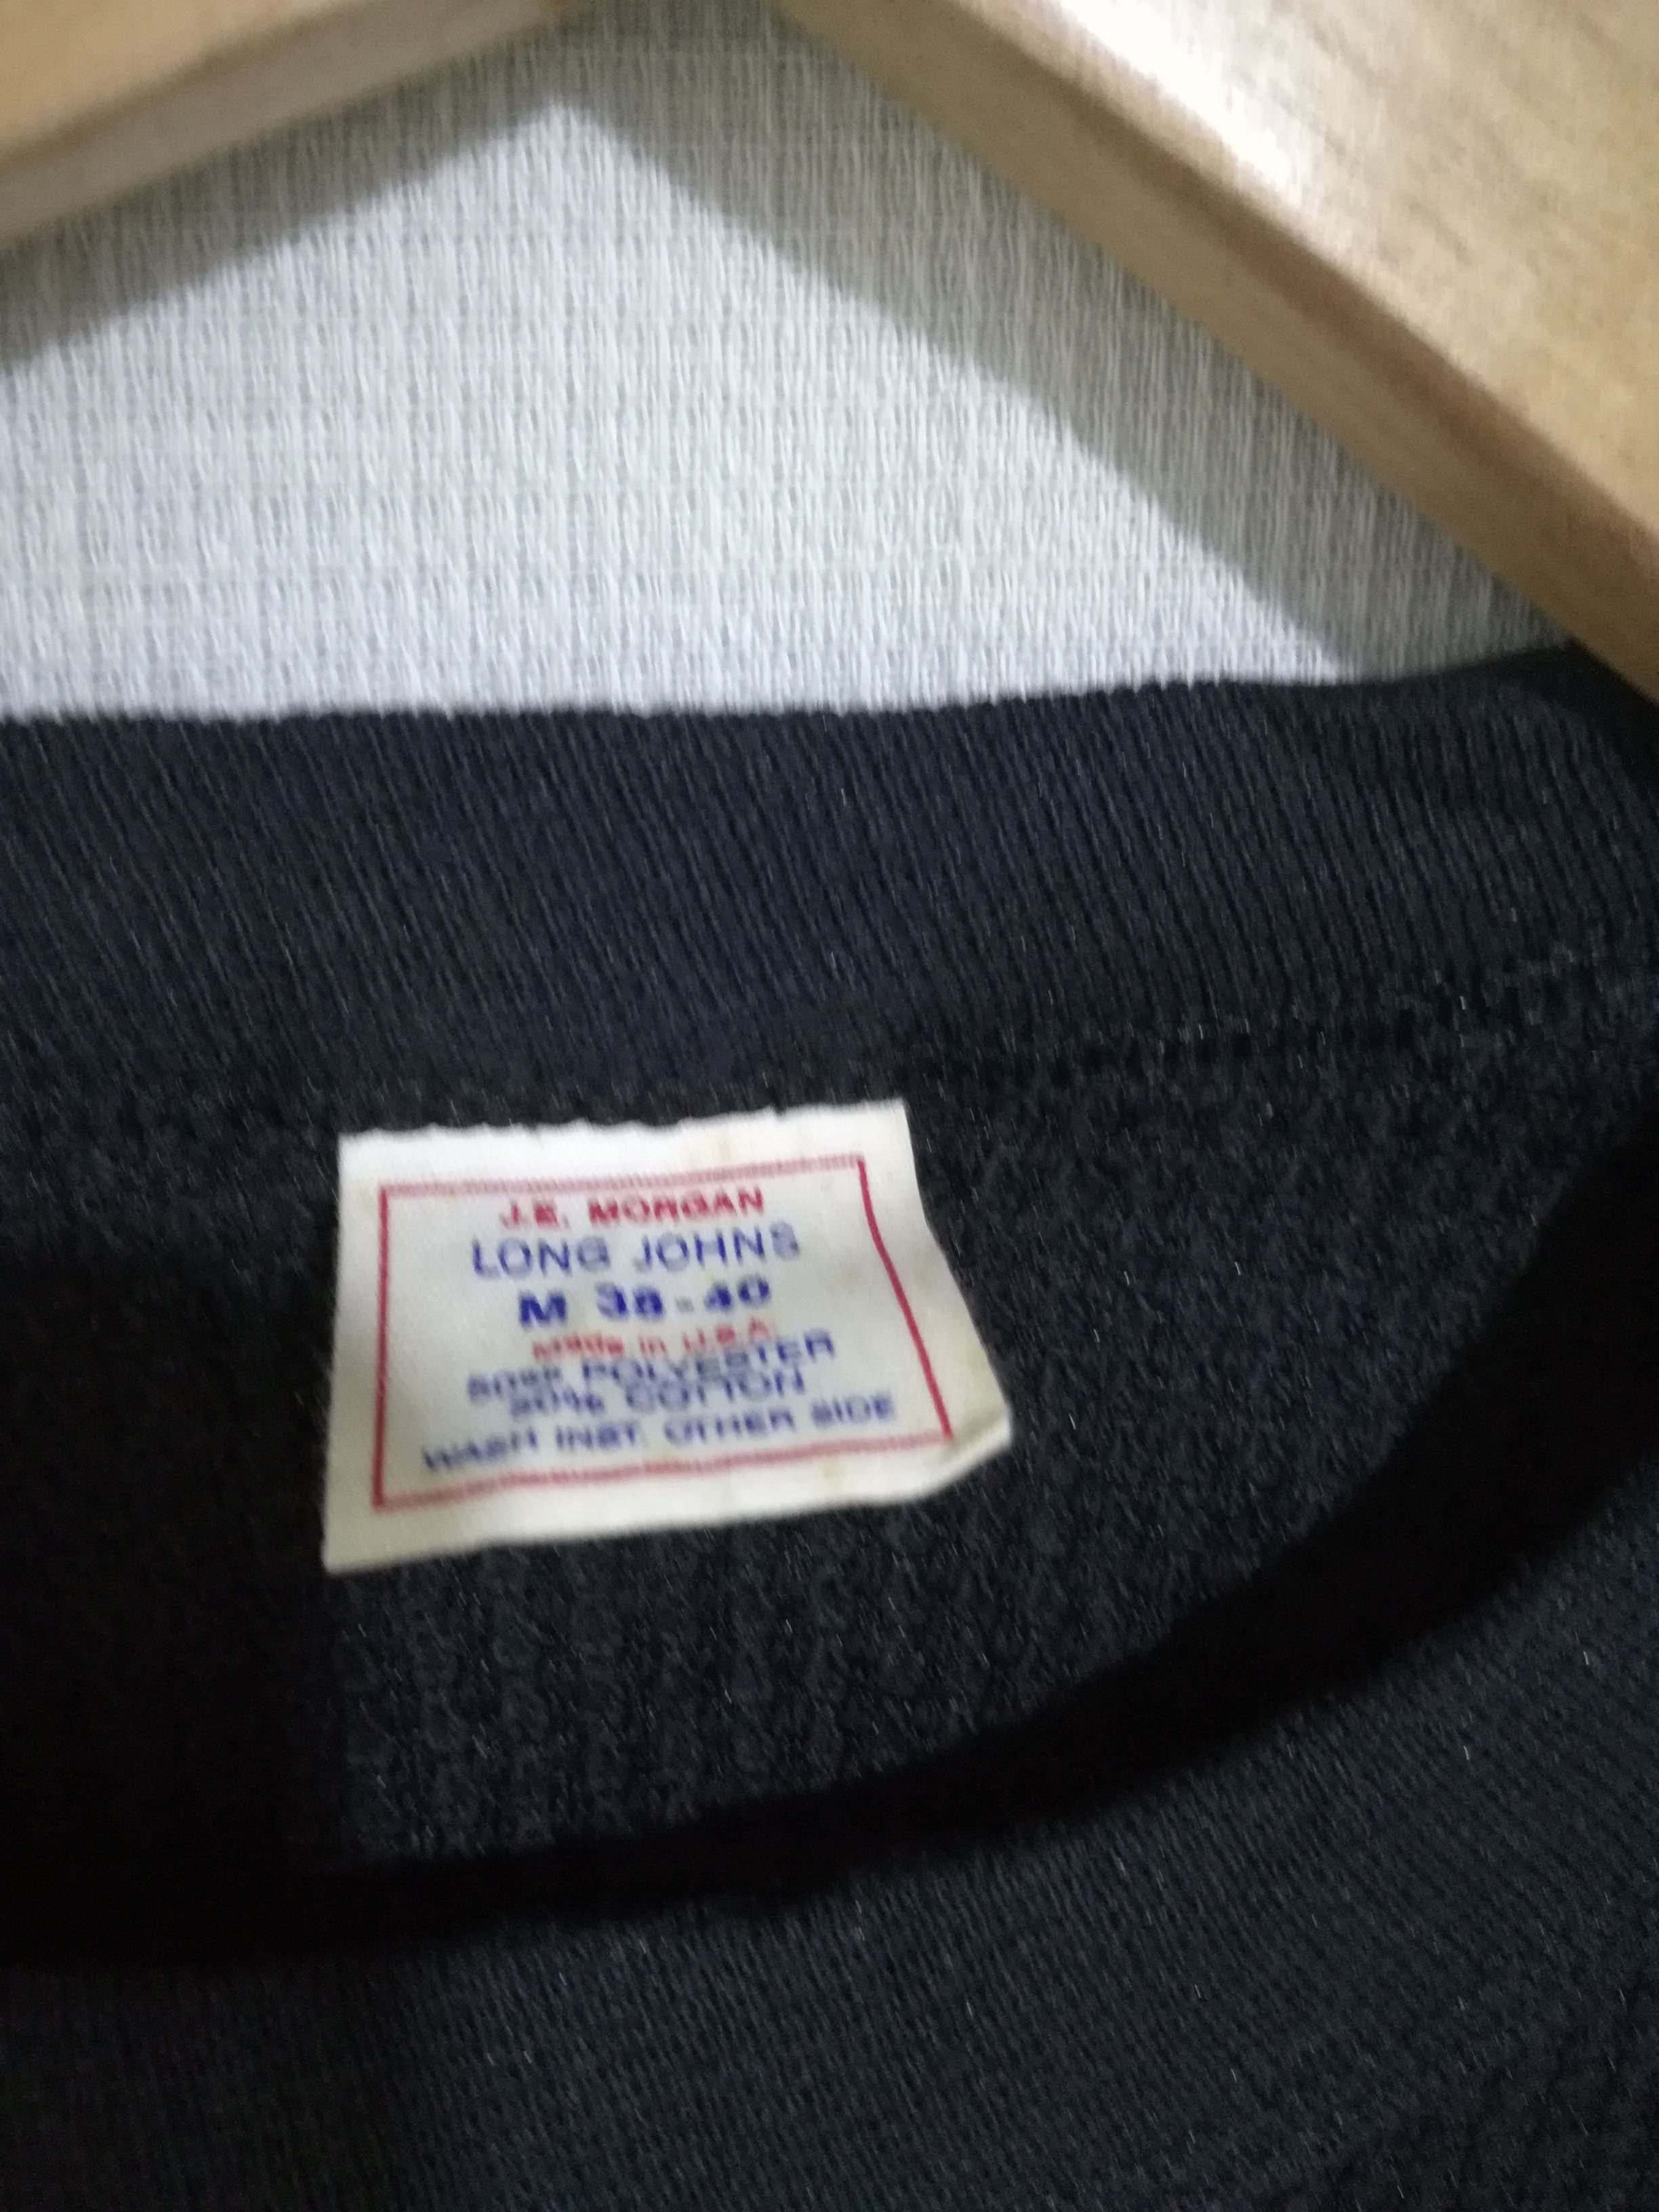 vintage thermal shirt j.e morgan long john stretched - 2